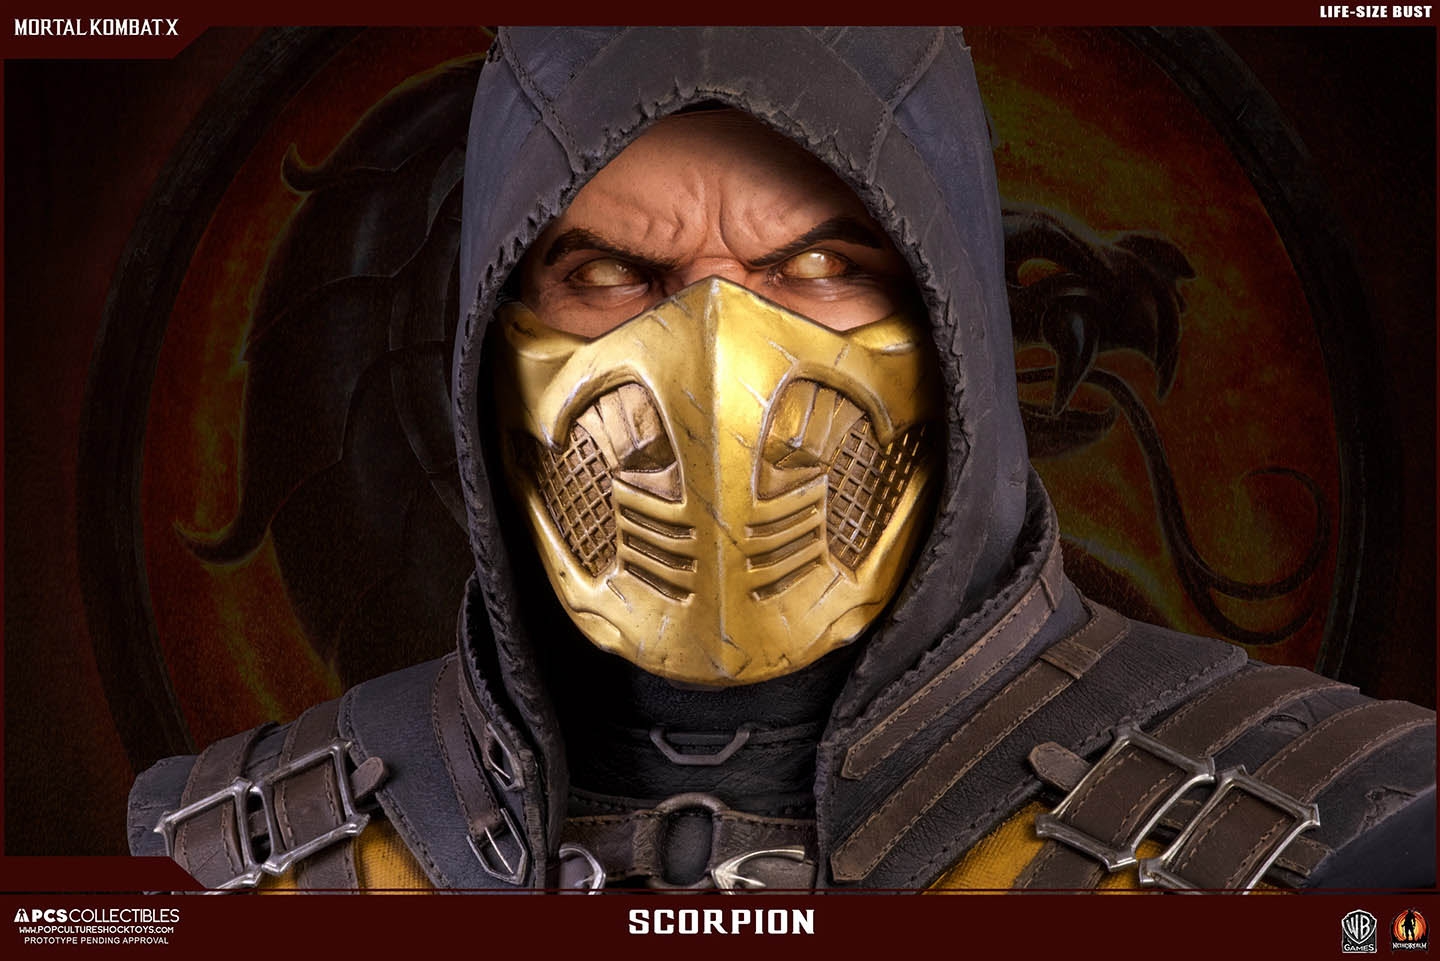 Scorpion-Bust-Pop-culture-Shock-Mortal-Kombat-X-010.jpg